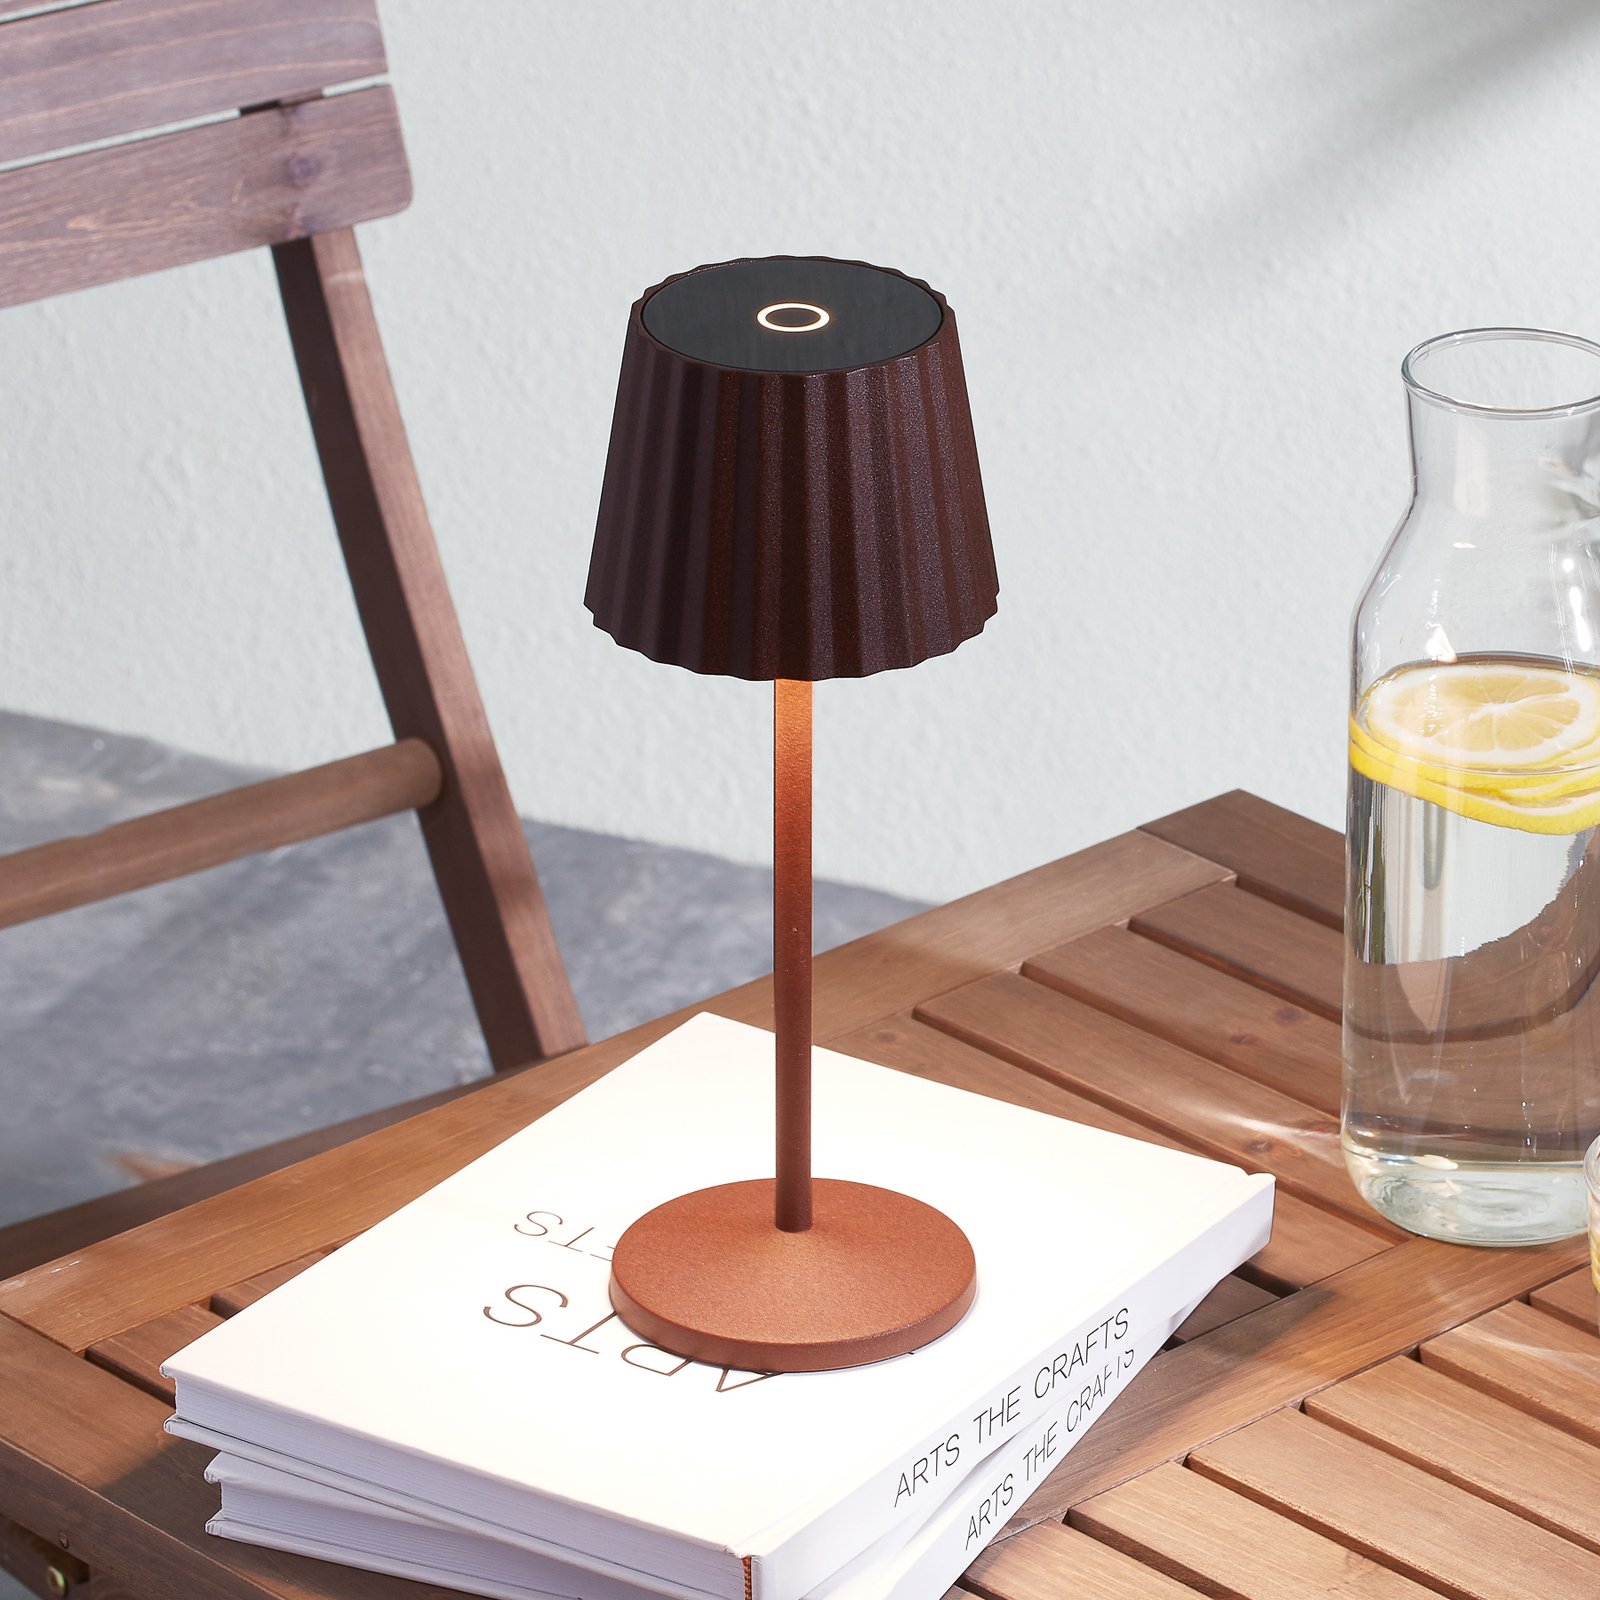 Lindby LED table lamp Esali, brown, set of 3, aluminium